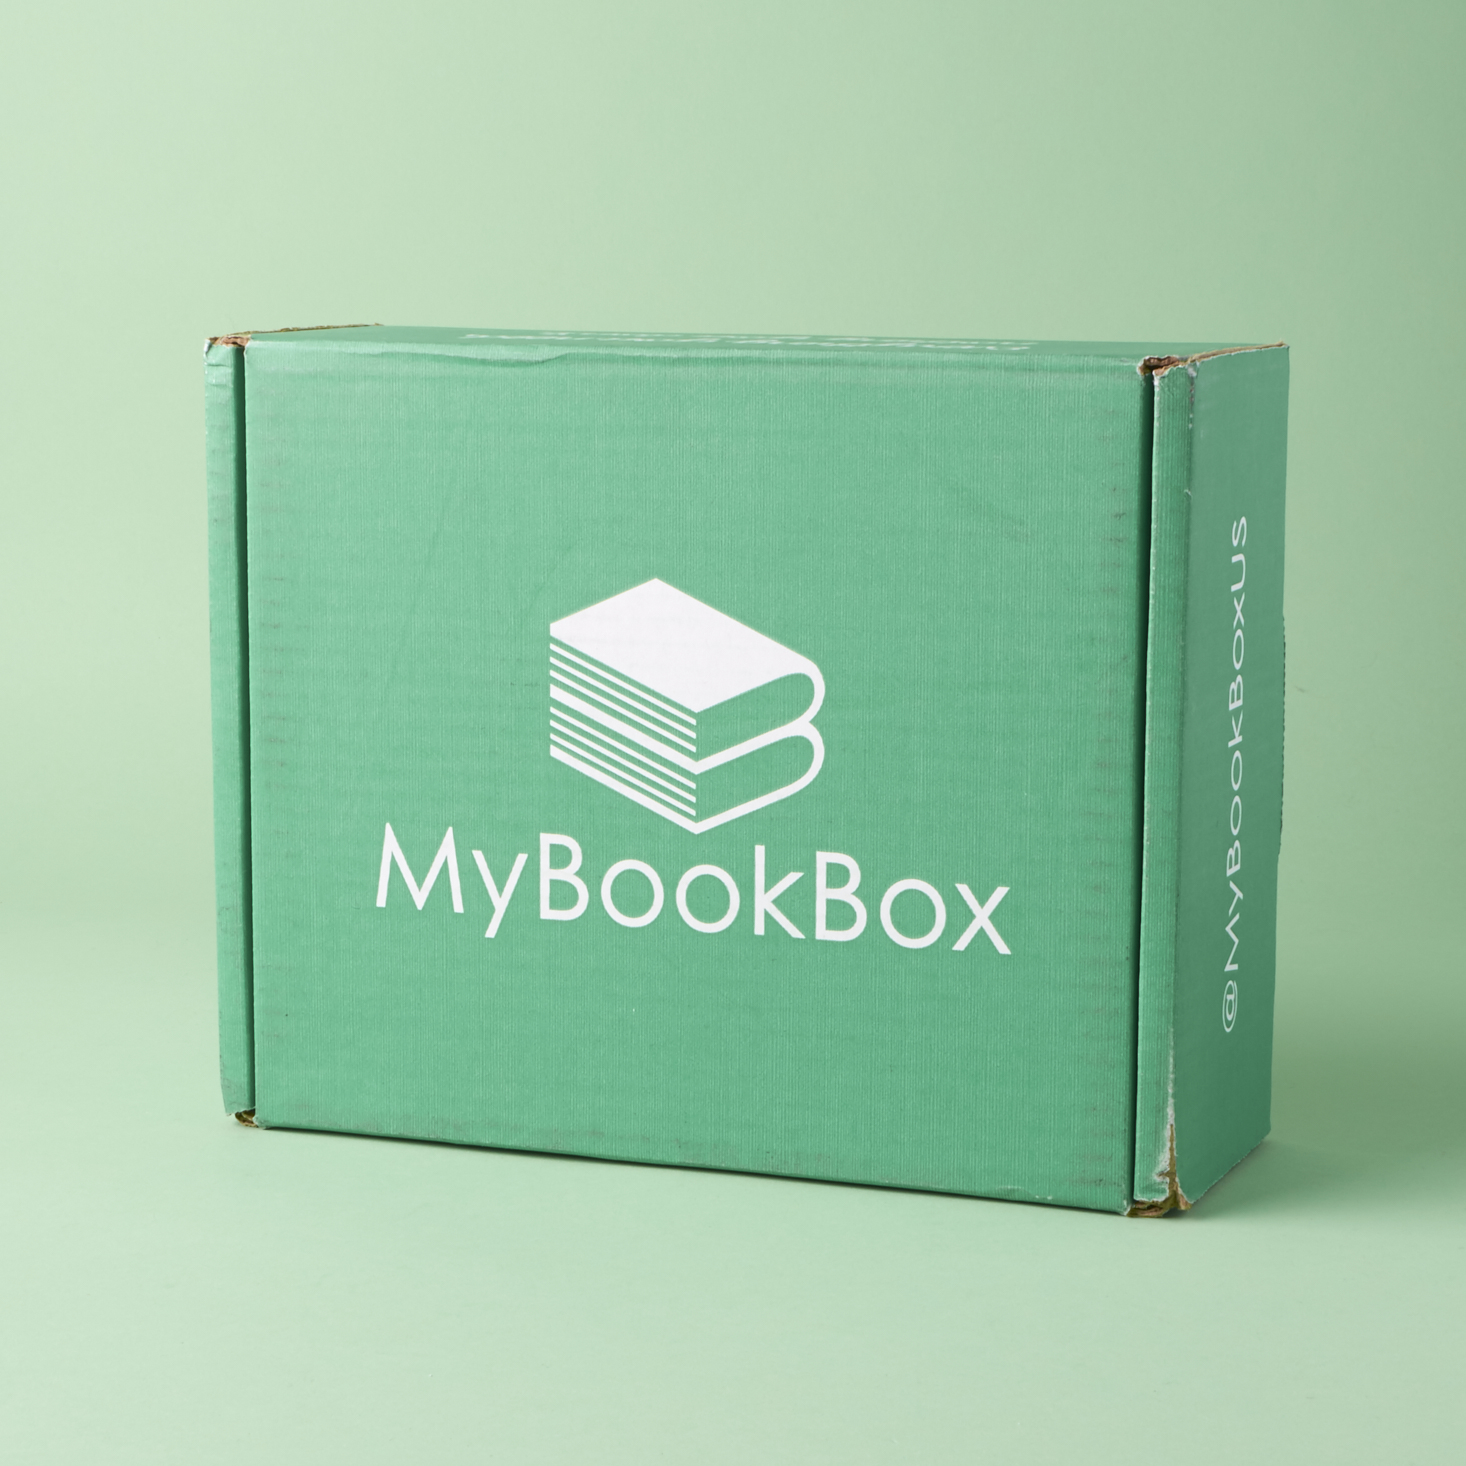 MyBookBox Book Subscription Box Review – December 2016